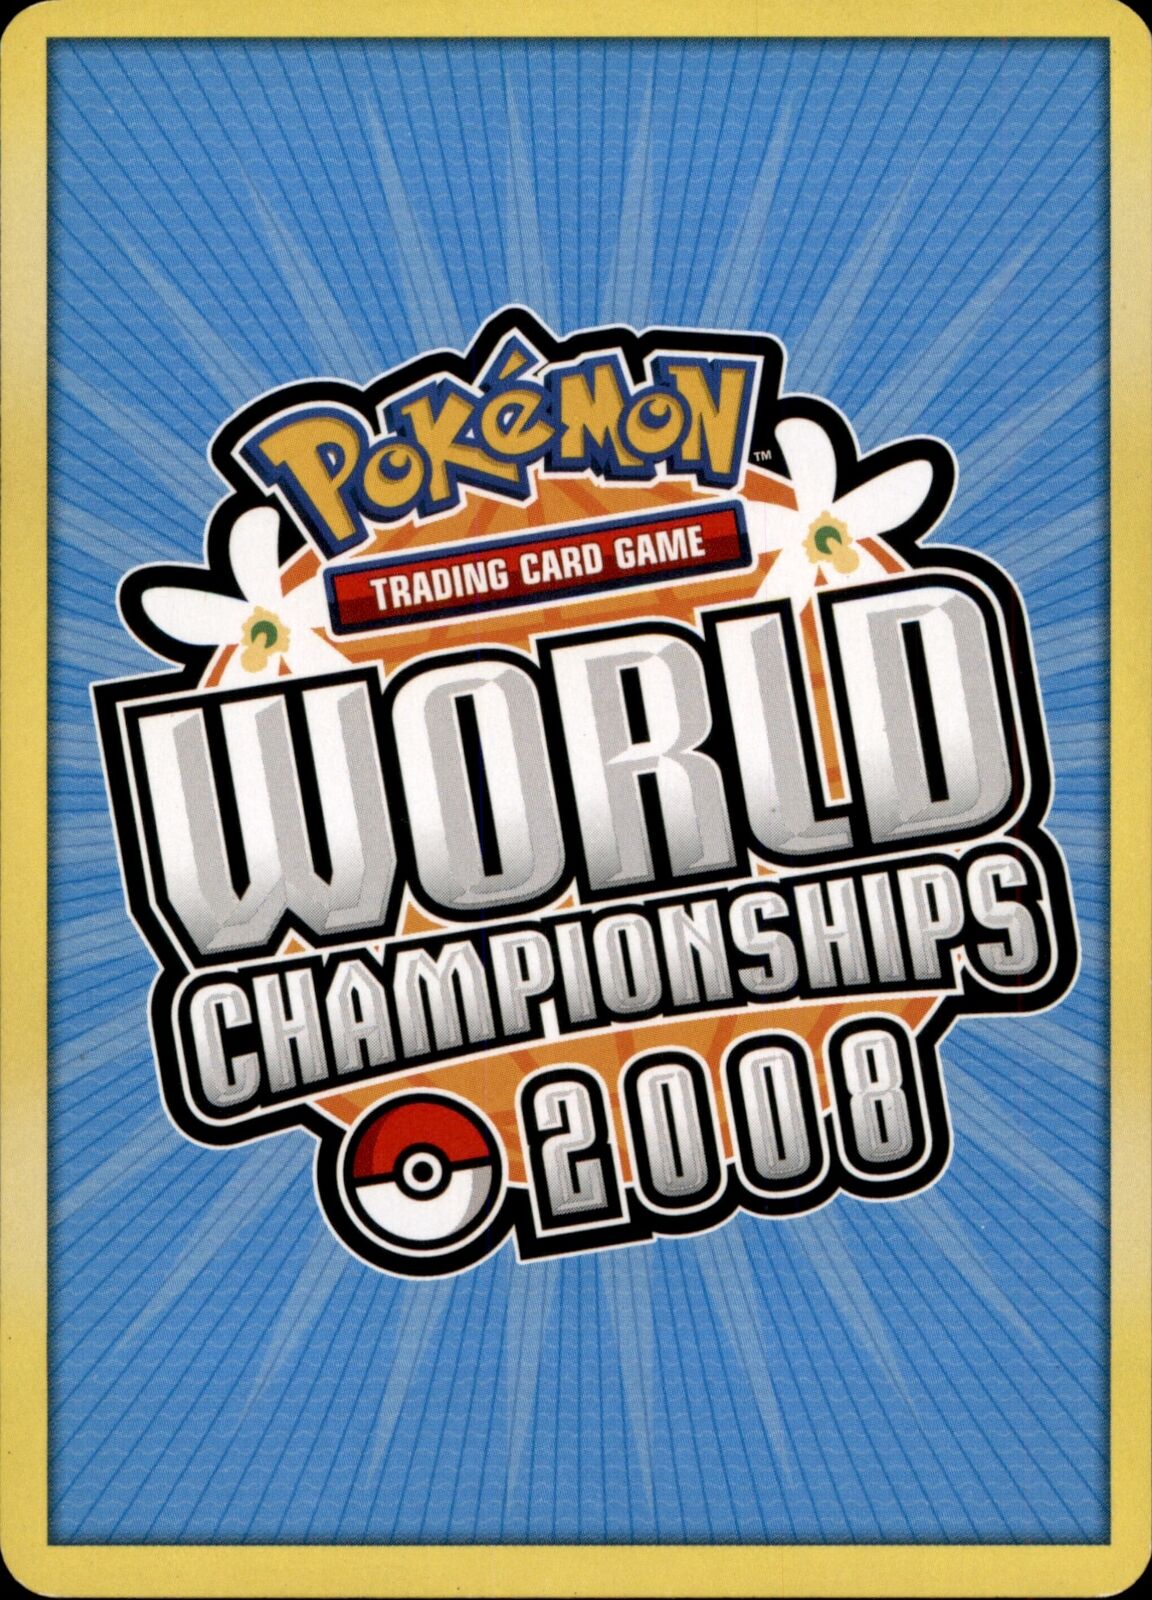 2008 World Championship card back